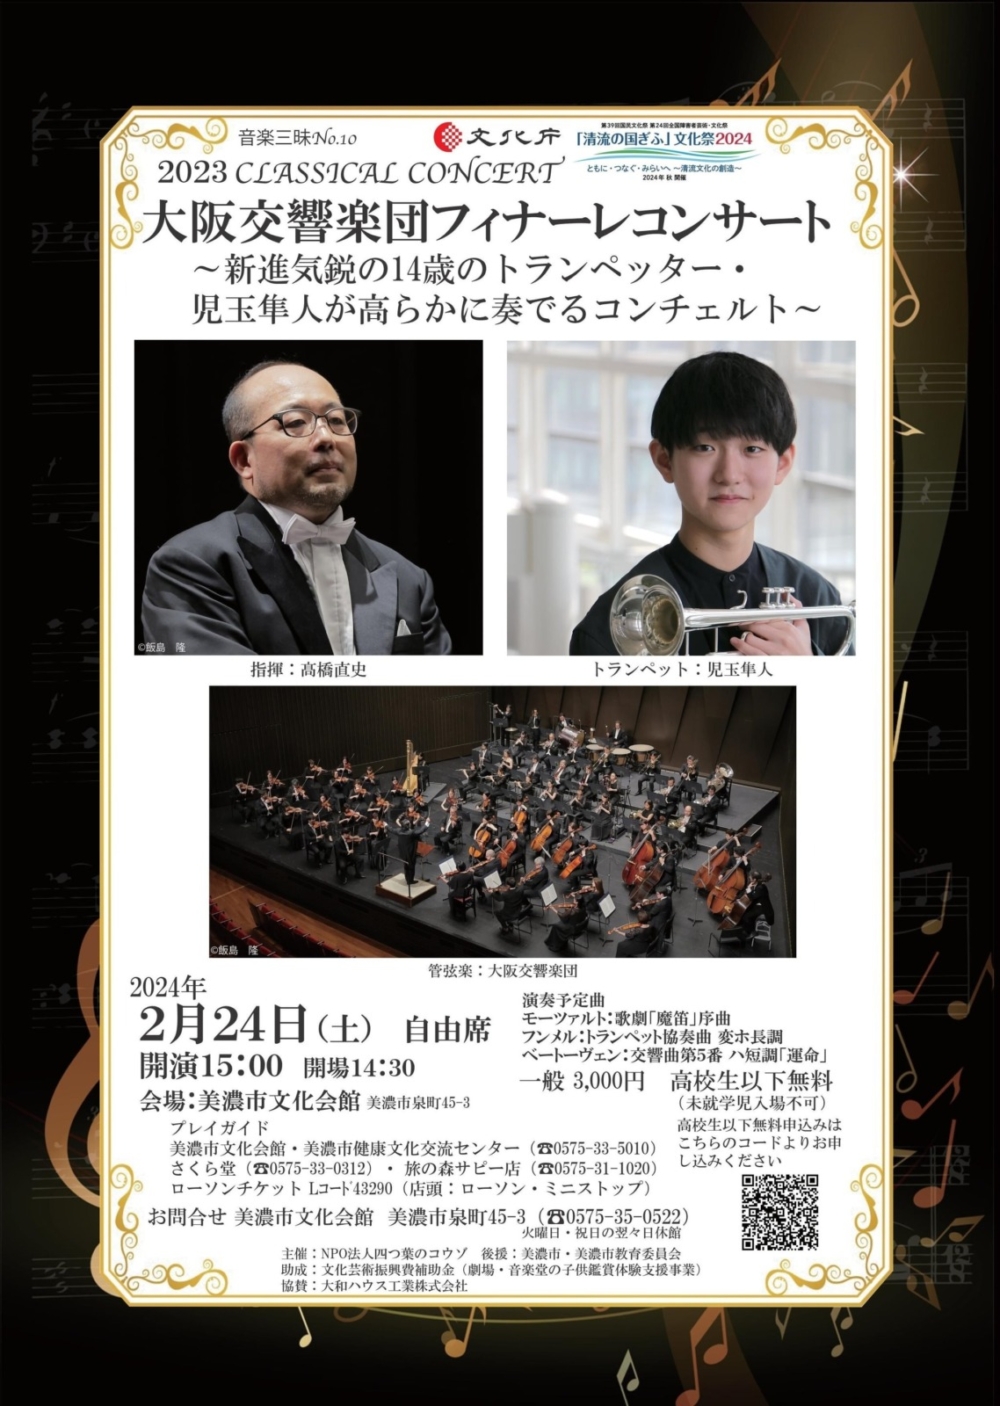 2023 CLASSICAL CONCERT 大阪交響楽団　フィナーレコンサート